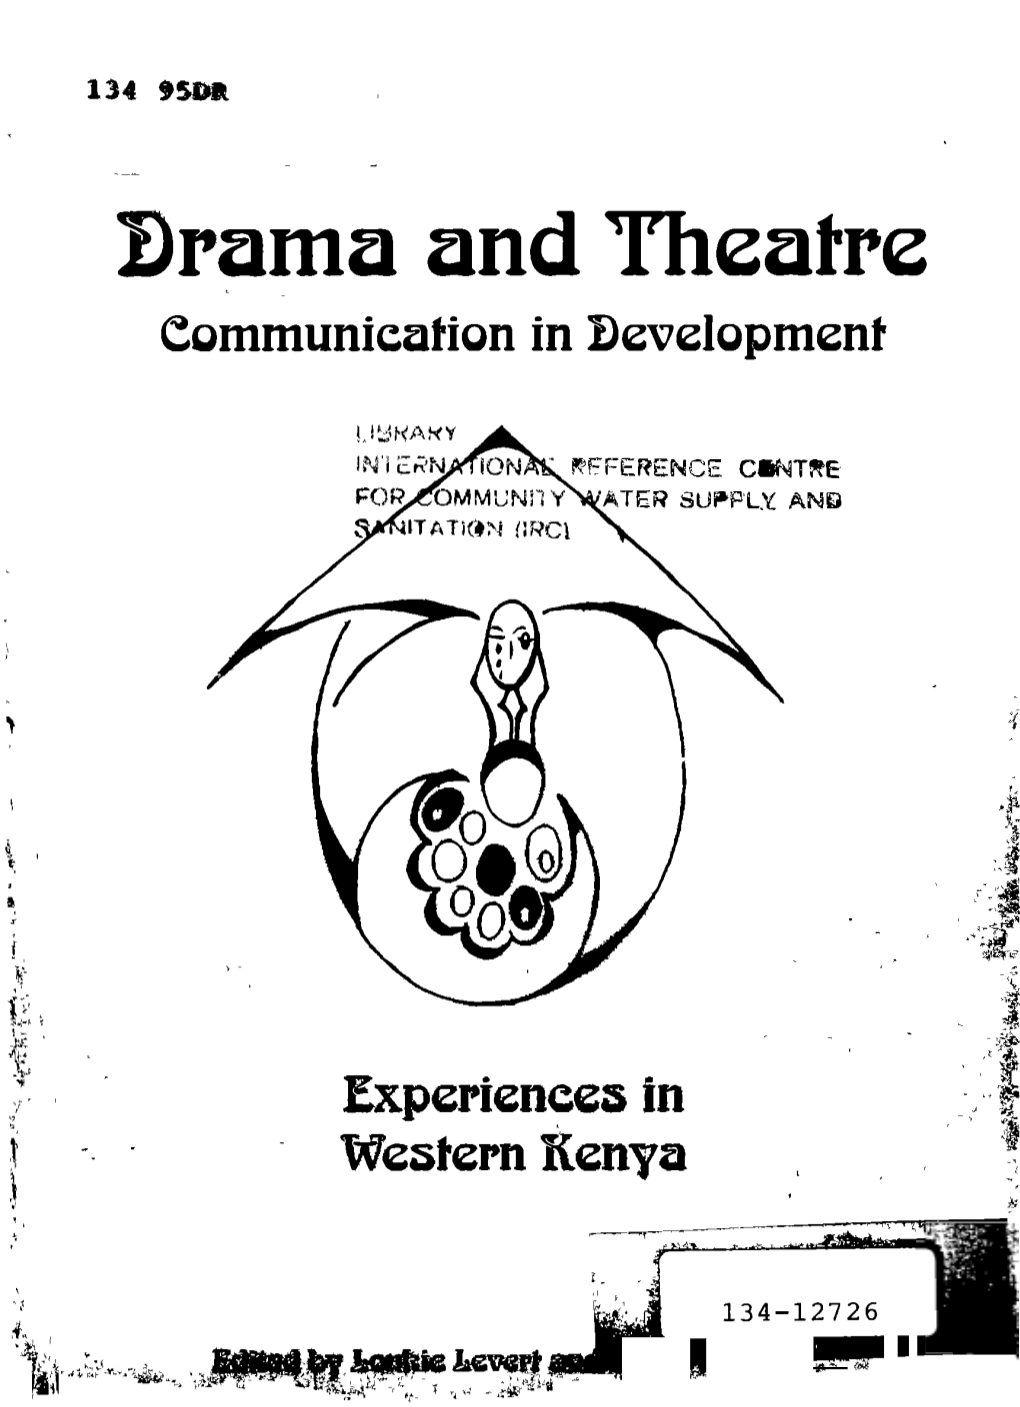 Drama and Theatre Communication in Development